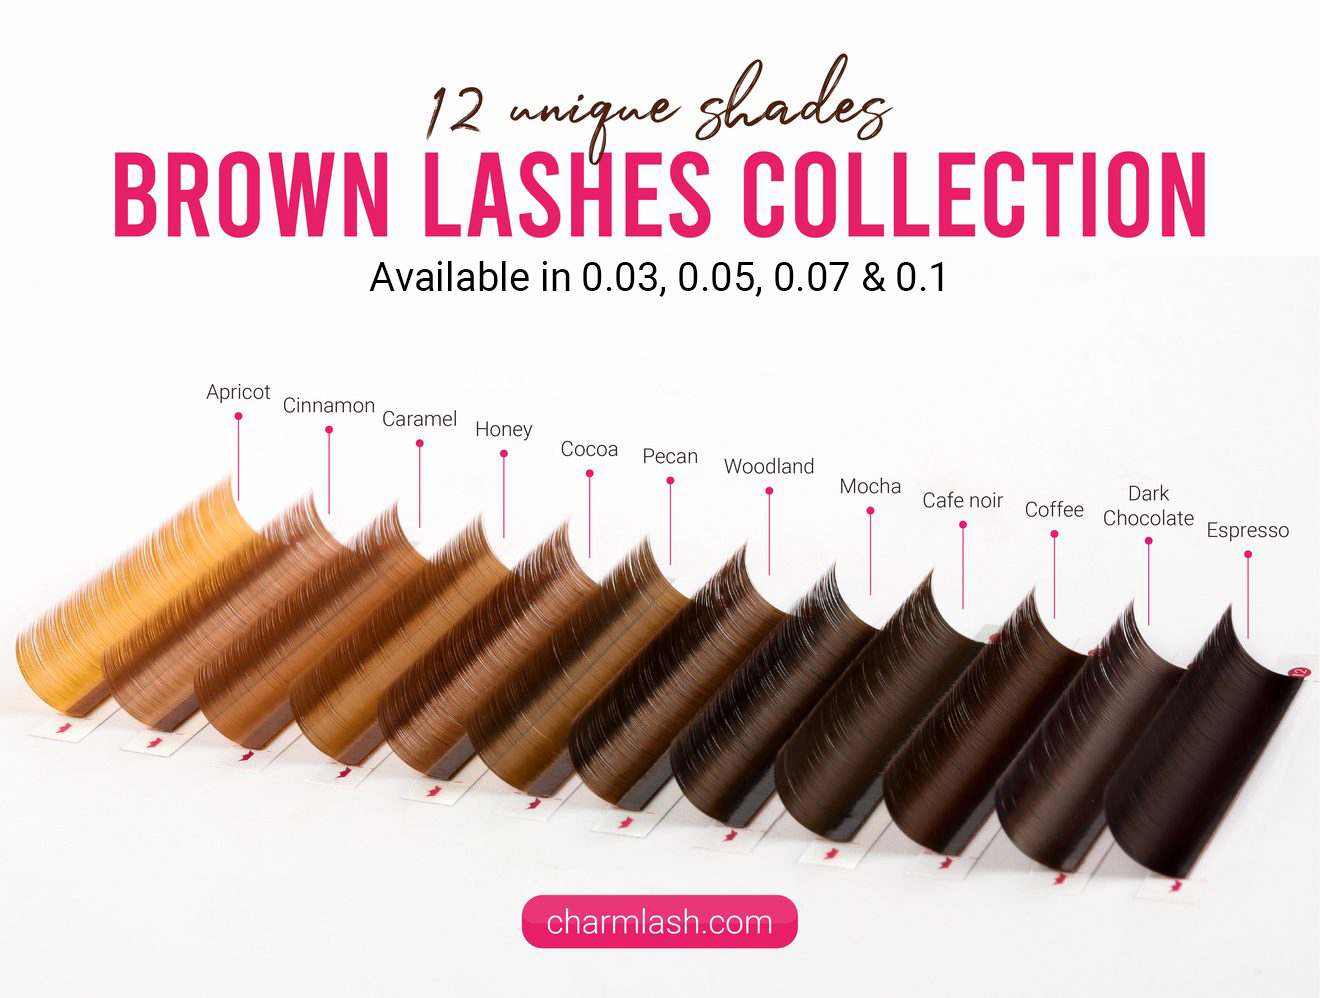 Wholesale-brown-lashes-collection-12-shades-manufacturer-Vietnam